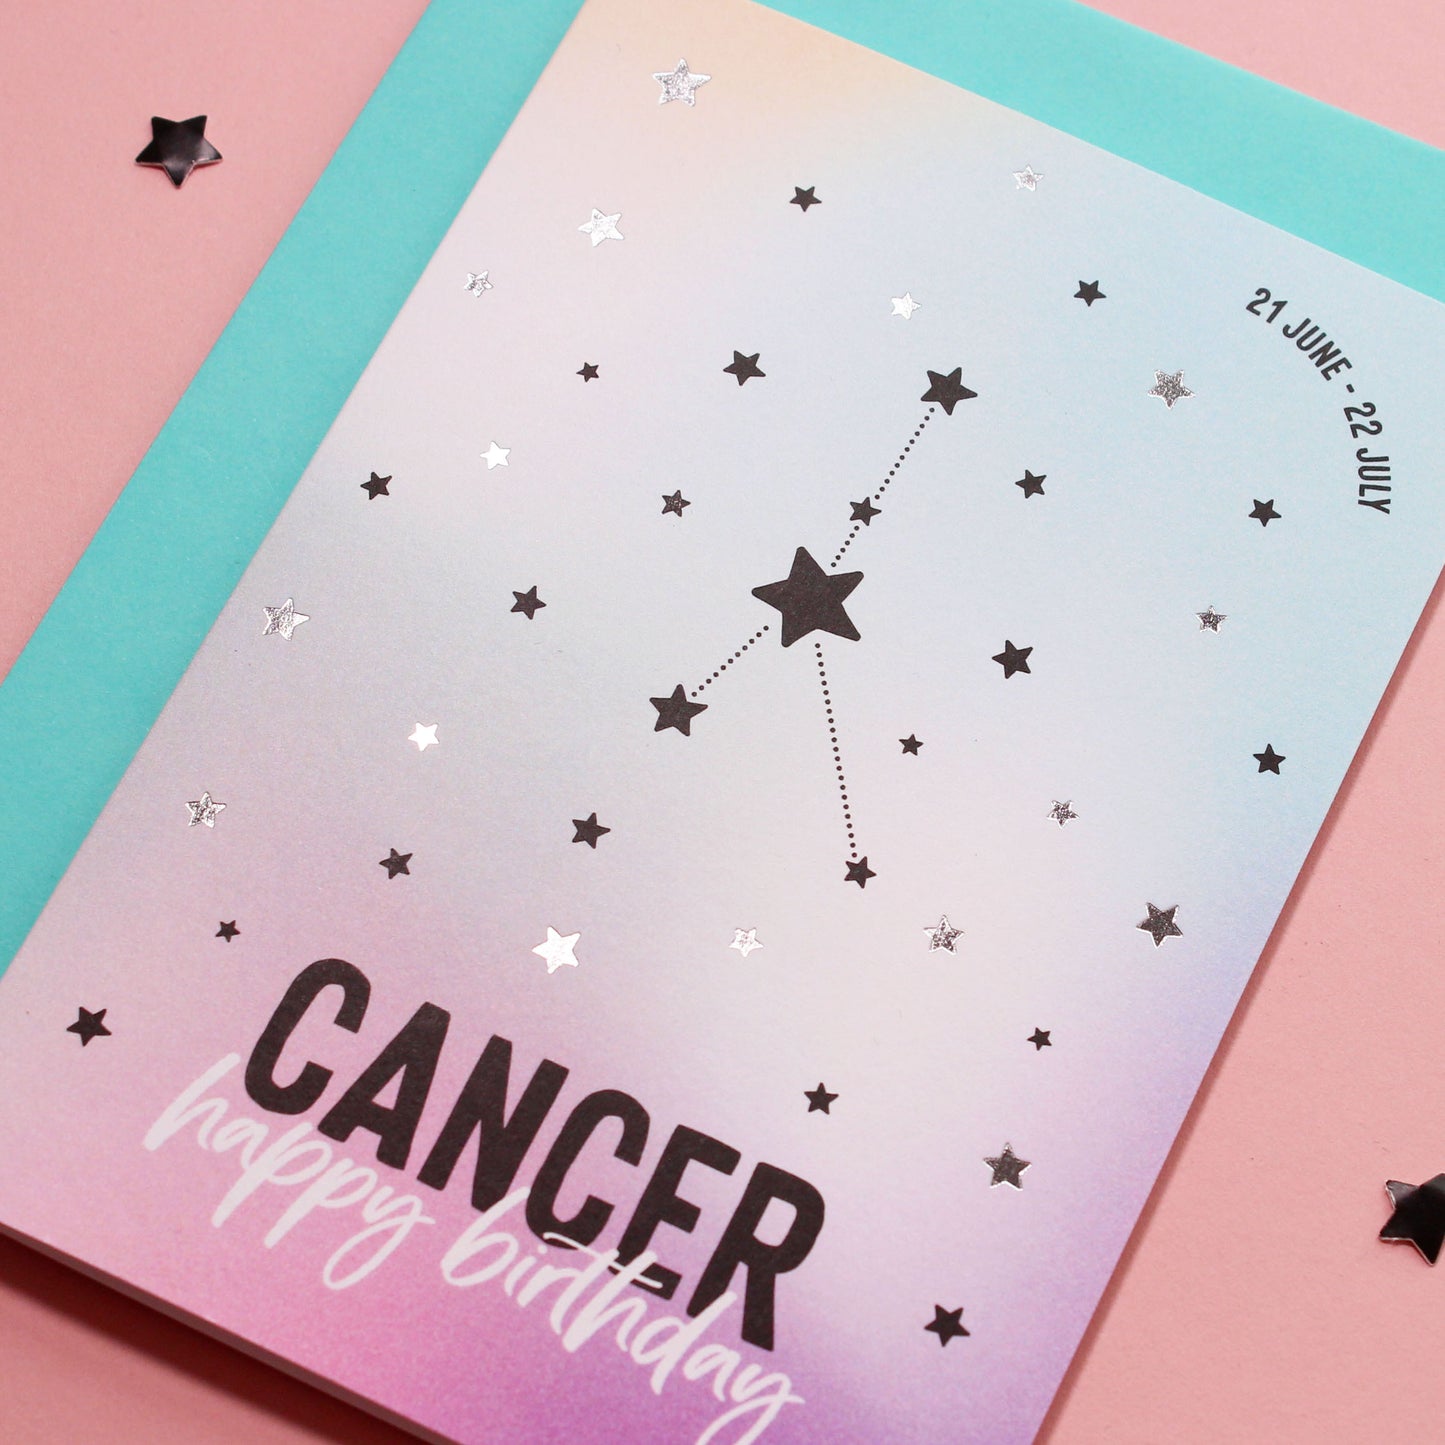 Cancer birthday card